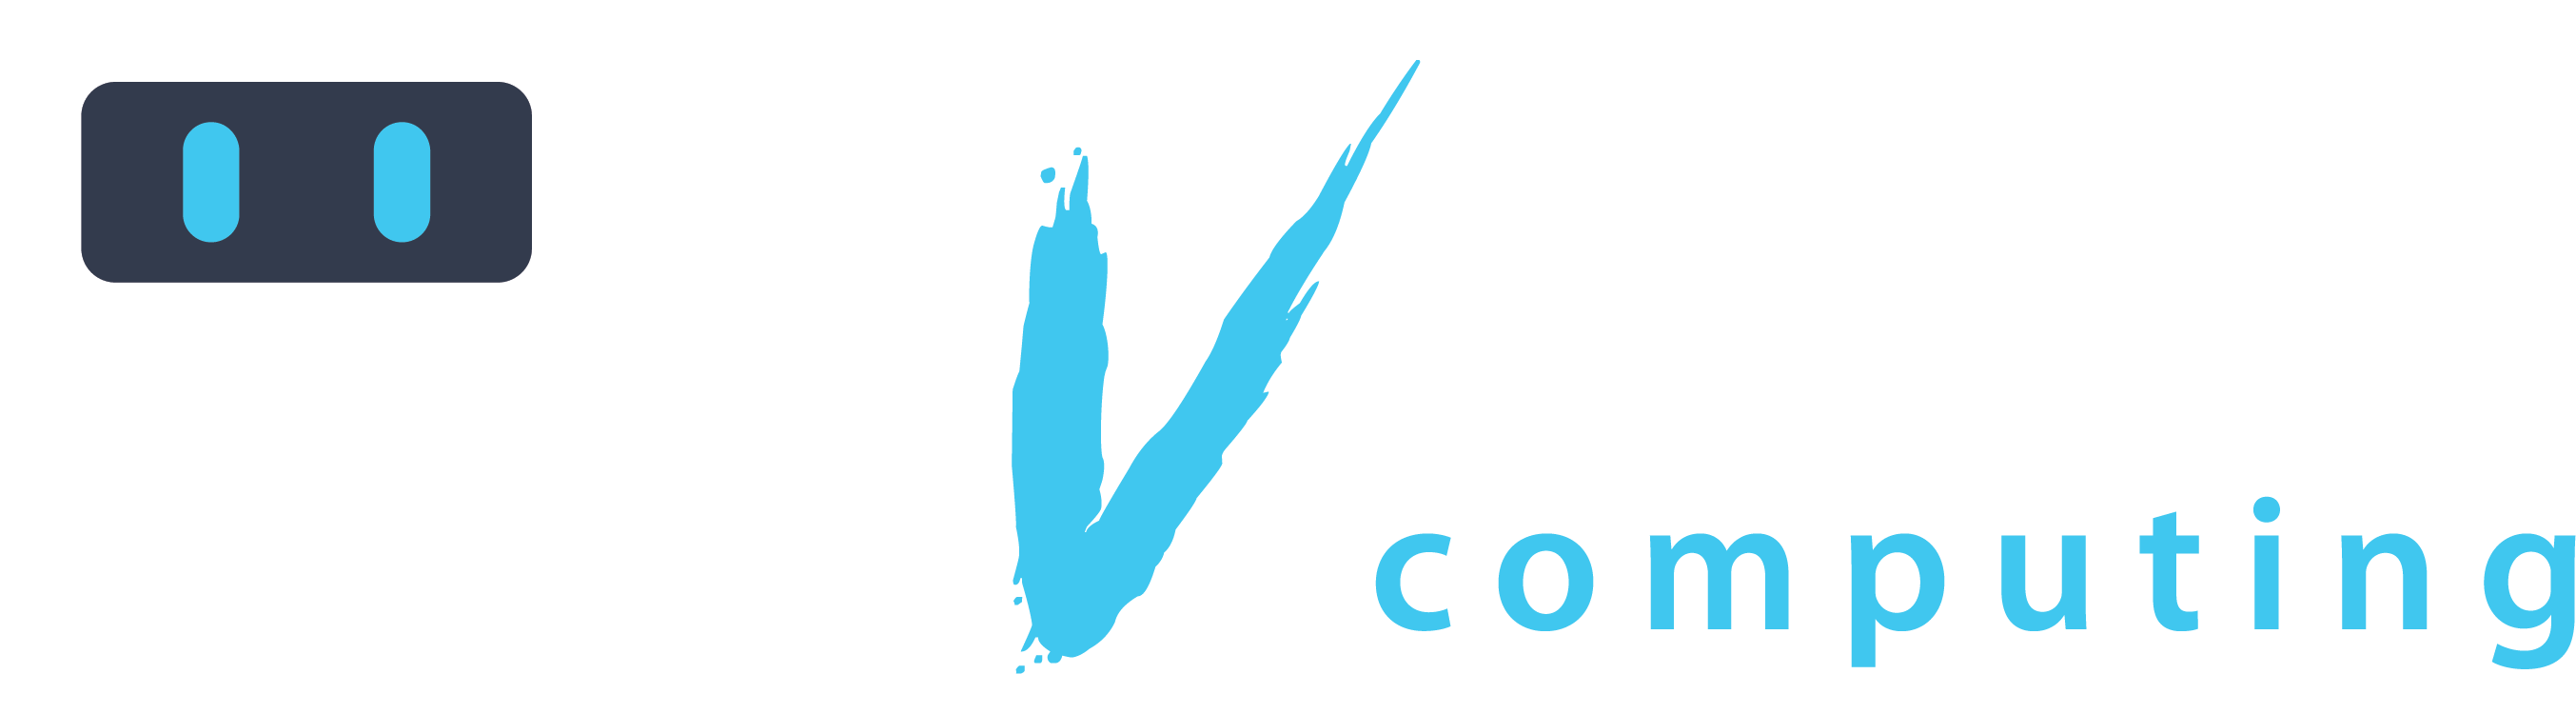 eVolve Computing